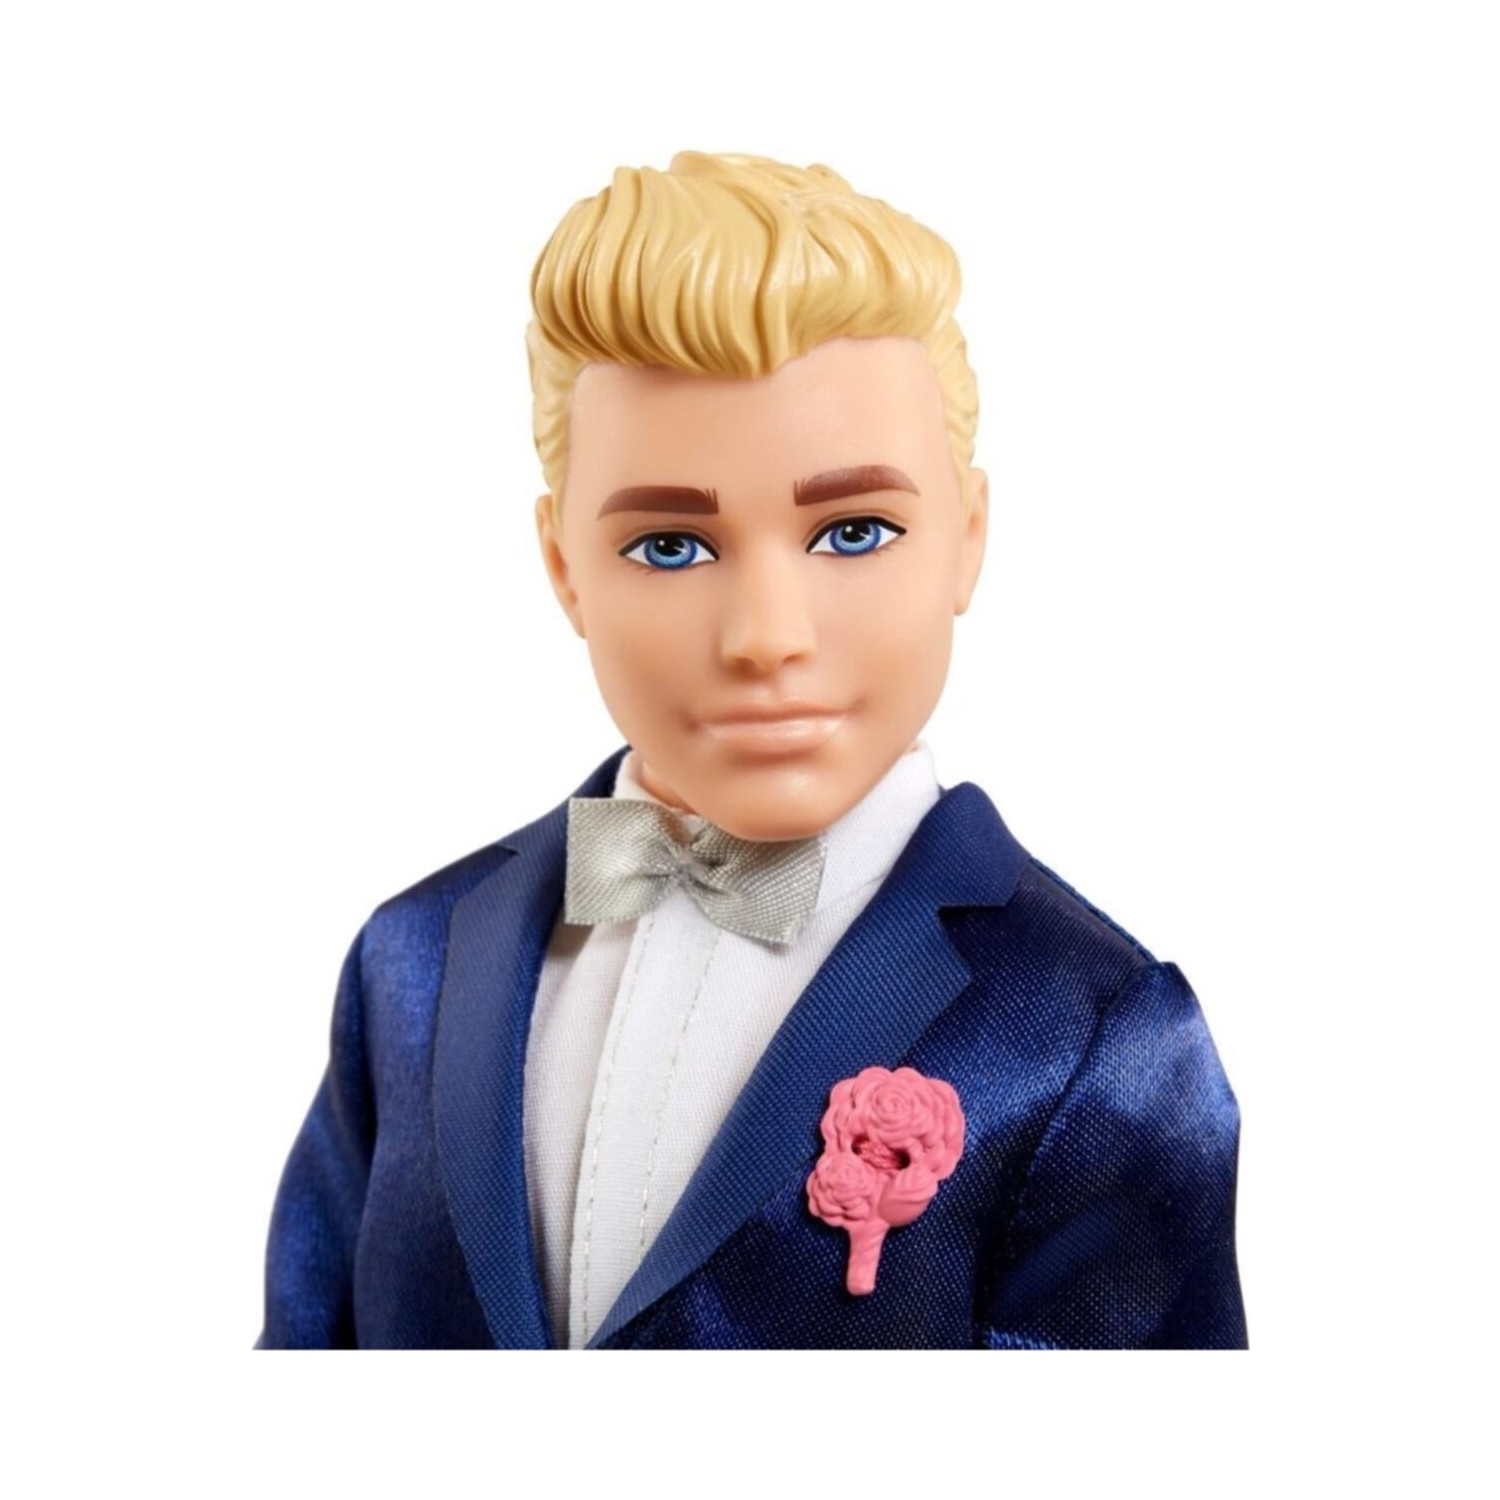 Кукла Barbie Кен